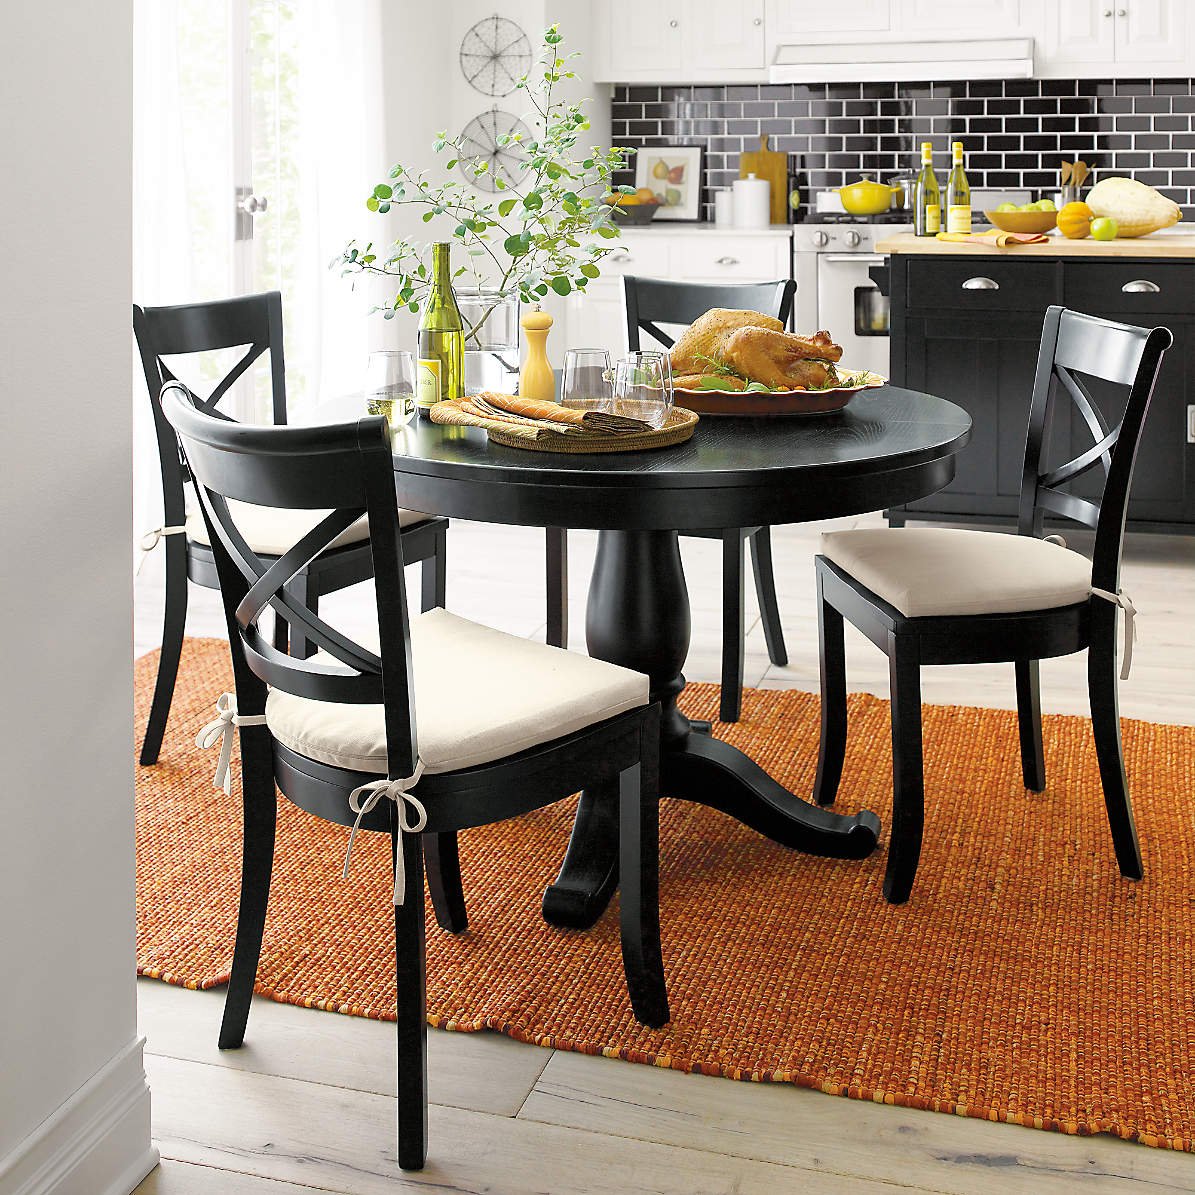 Темные кухонные столы. Стол Lakri Round Table. Стол икеа черный кухонный. Модные кухонные столы. Столы и стулья для кухни.